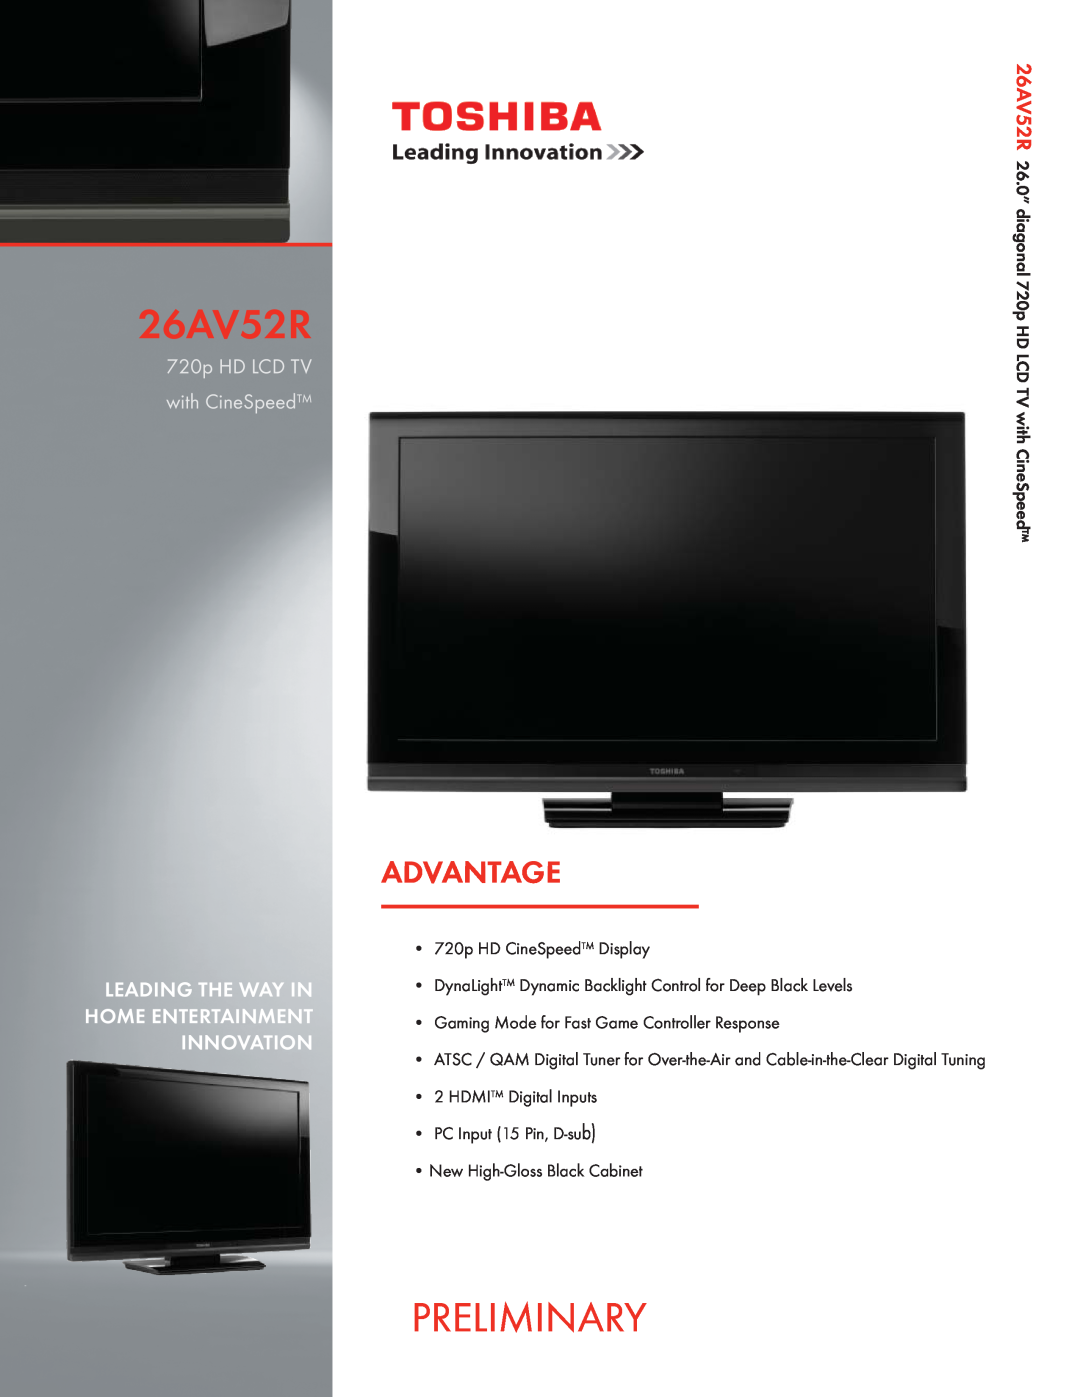 Toshiba 26AV52R manual Preliminary, Advantage, 720p HD LCD TV with CineSpeed 